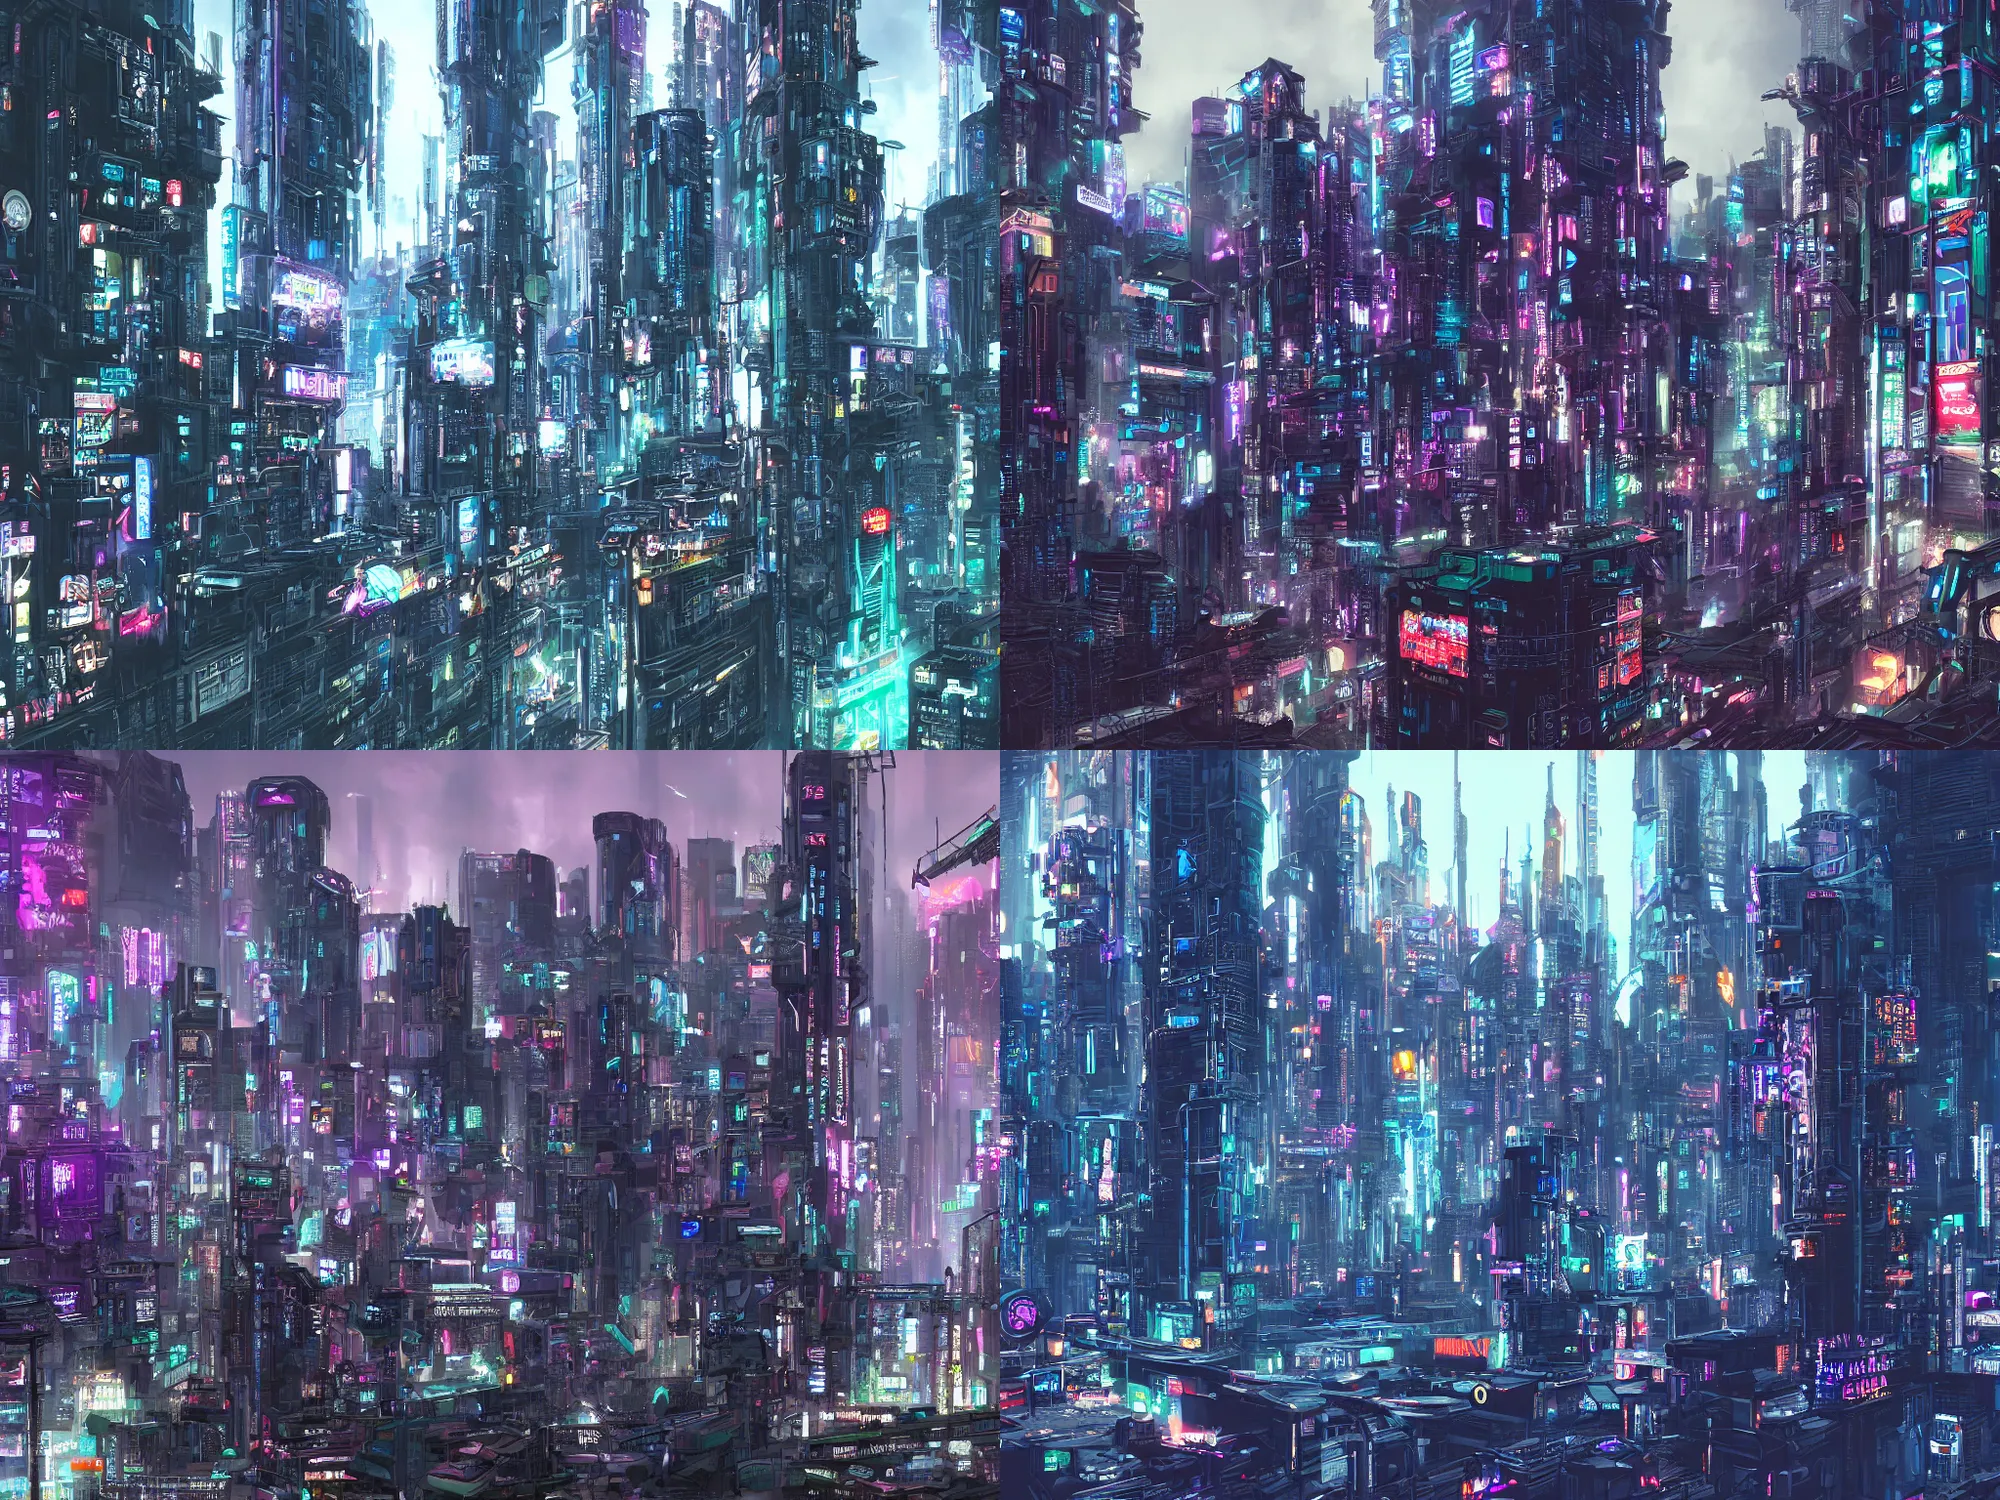 Prompt: A cyberpunk cityscape